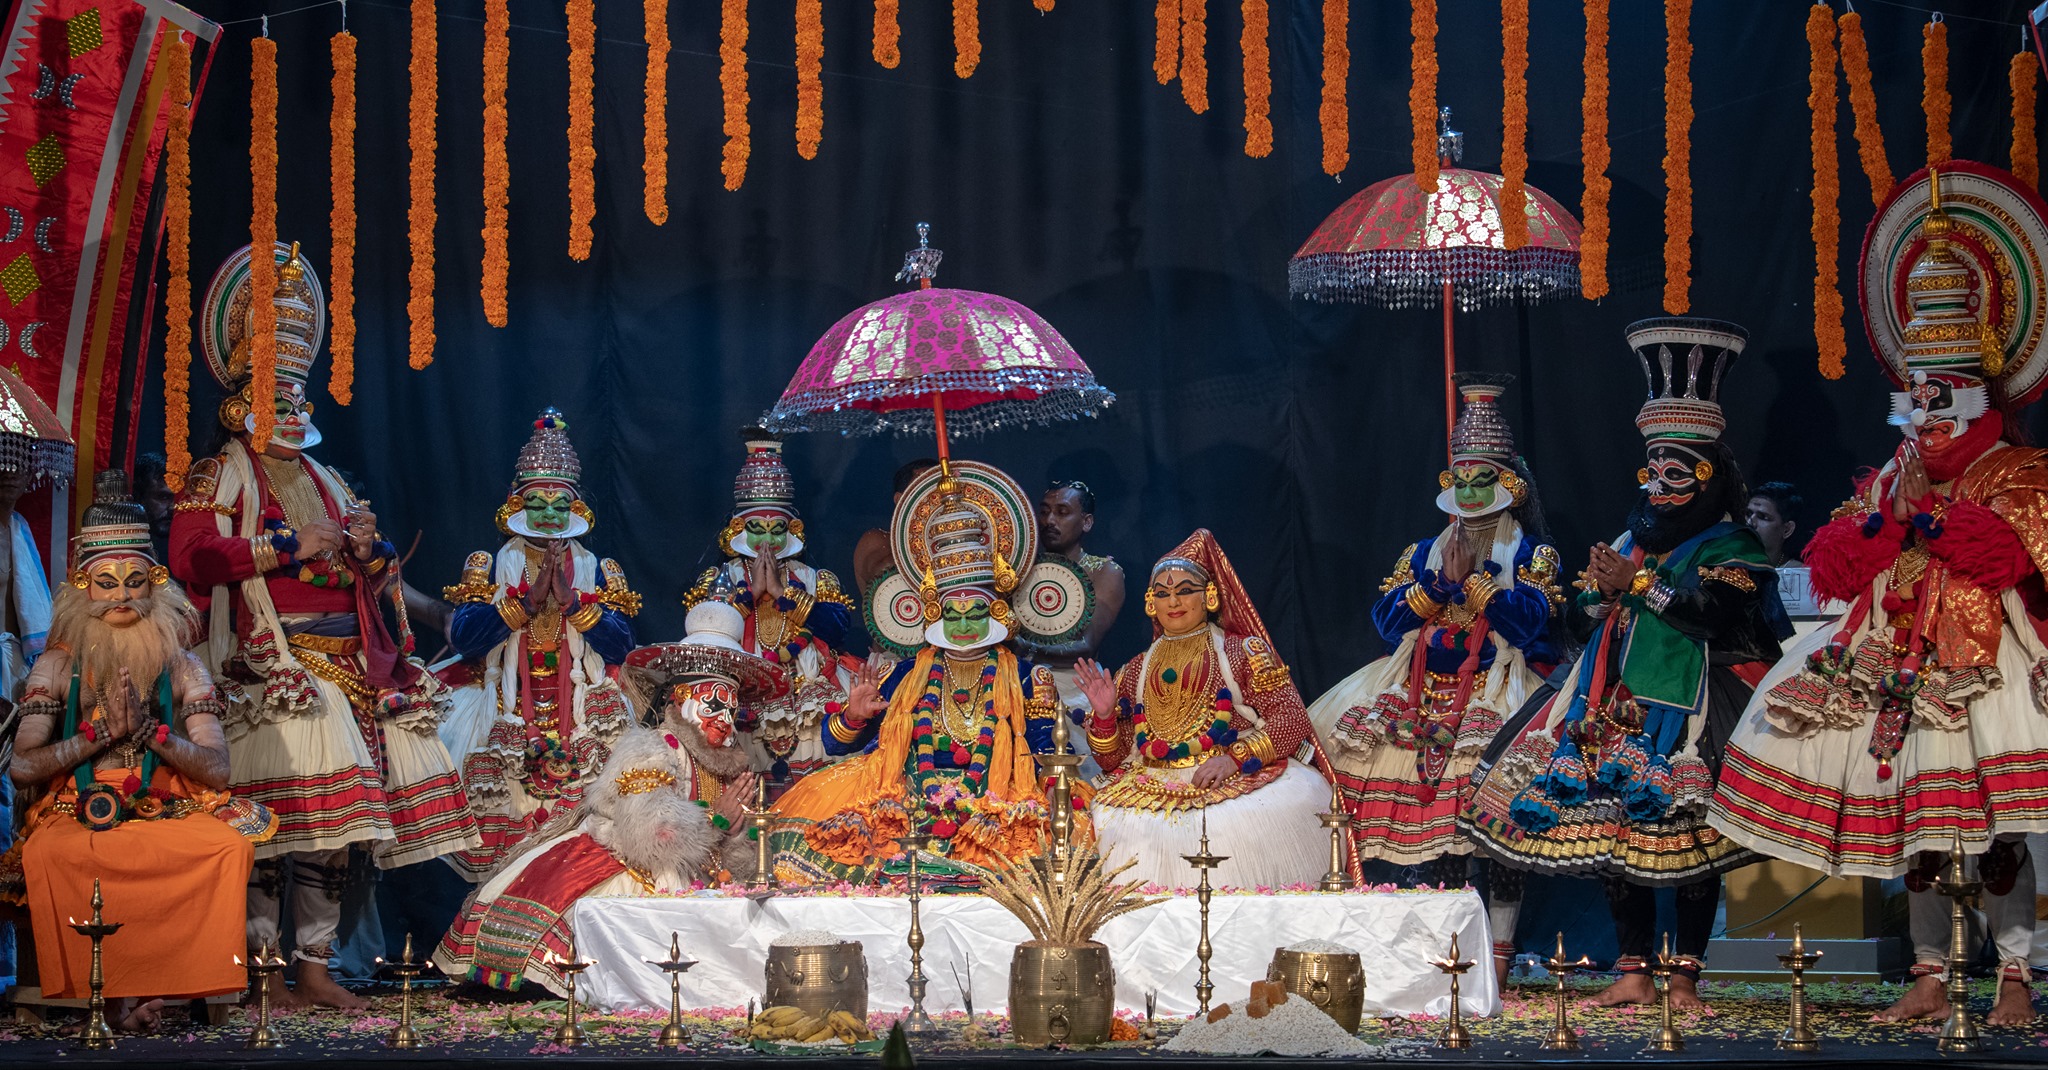 Kathakali dance and masks (article) | Khan Academy